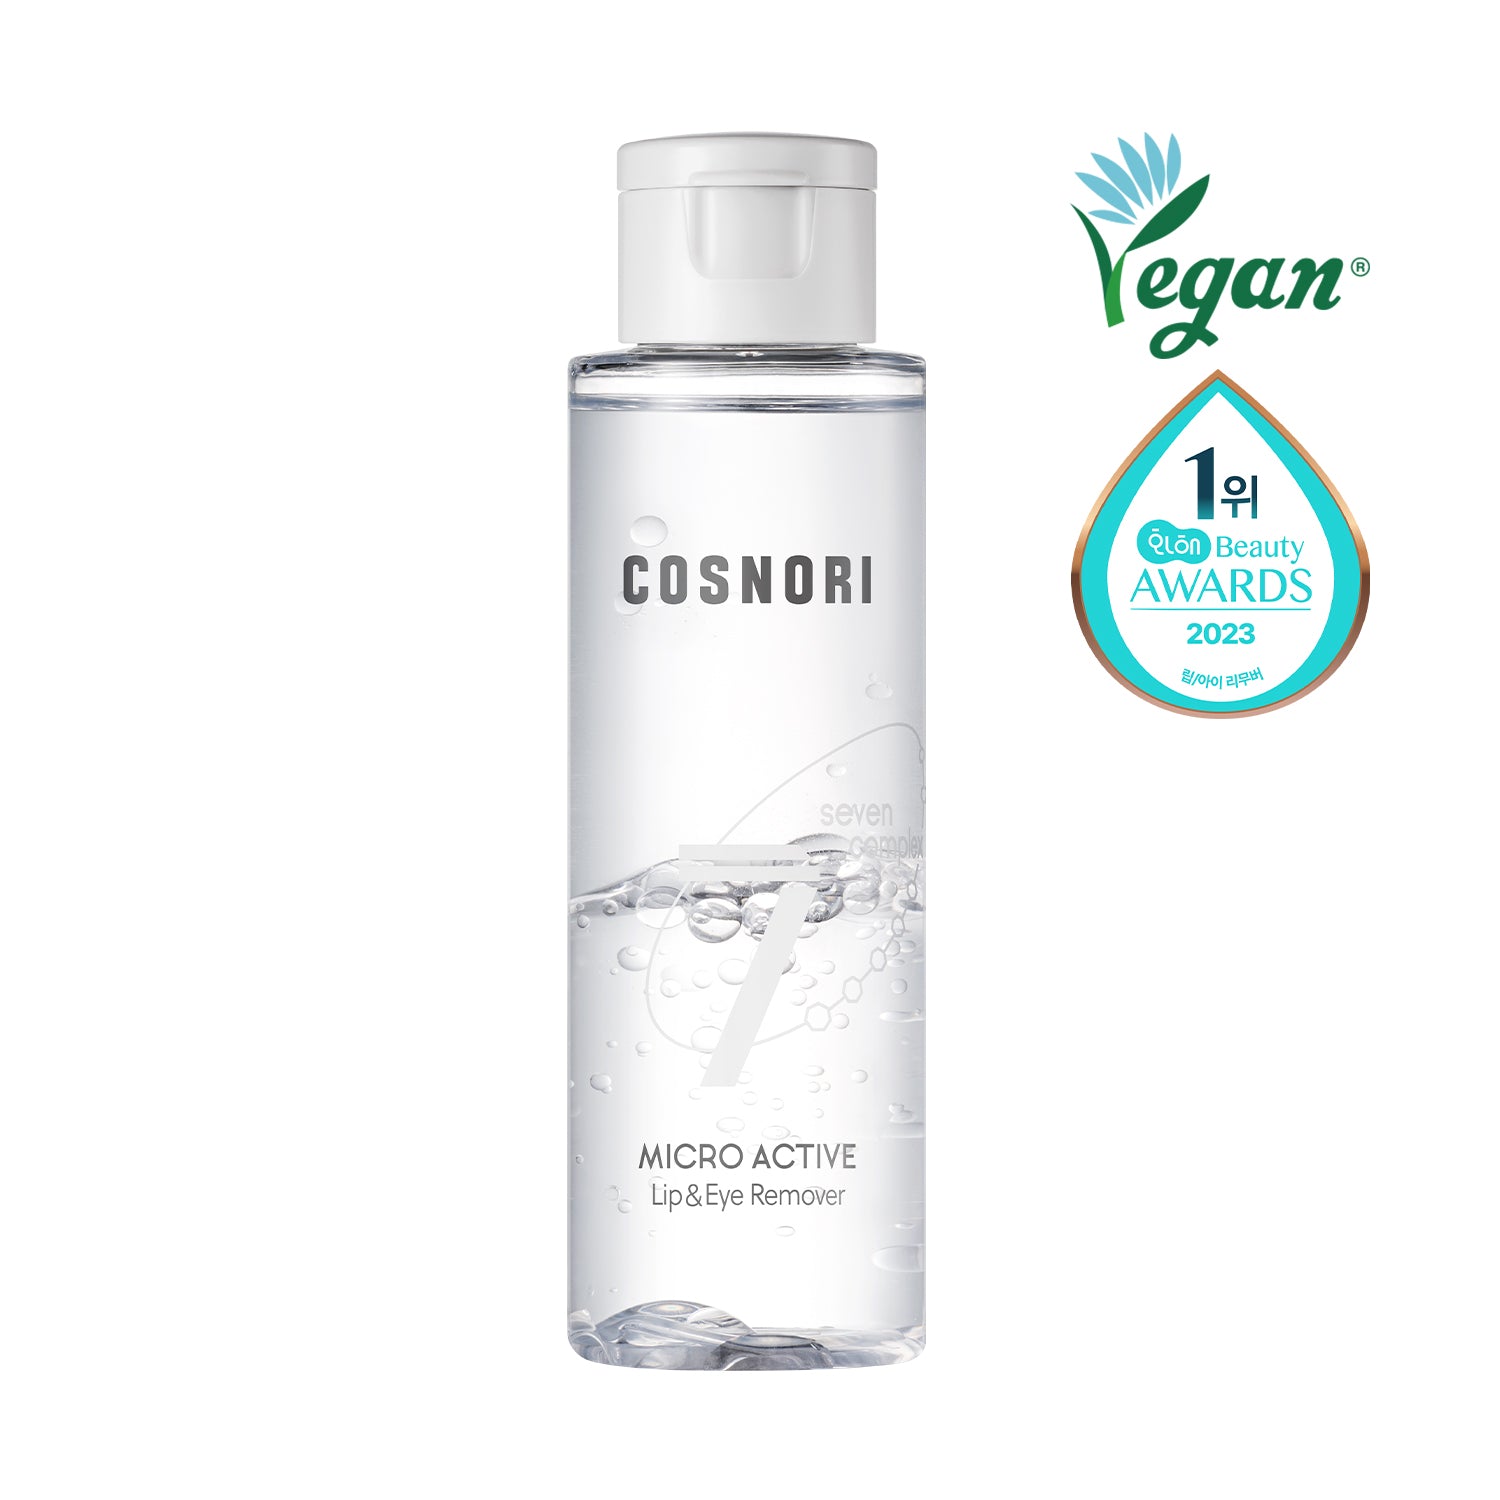 COSNORI - Micro Active Lip & Eye Remover